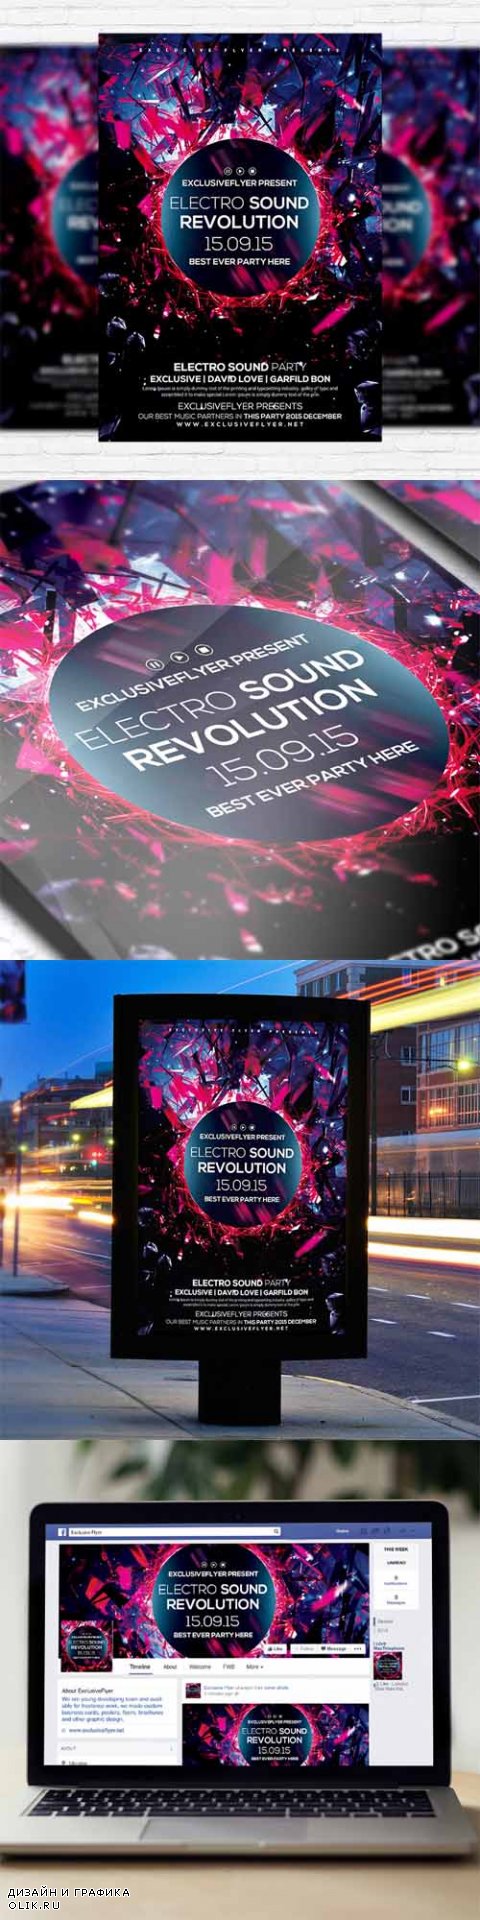 Flyer Template - Electro Sound Revolution + Facebook Cover